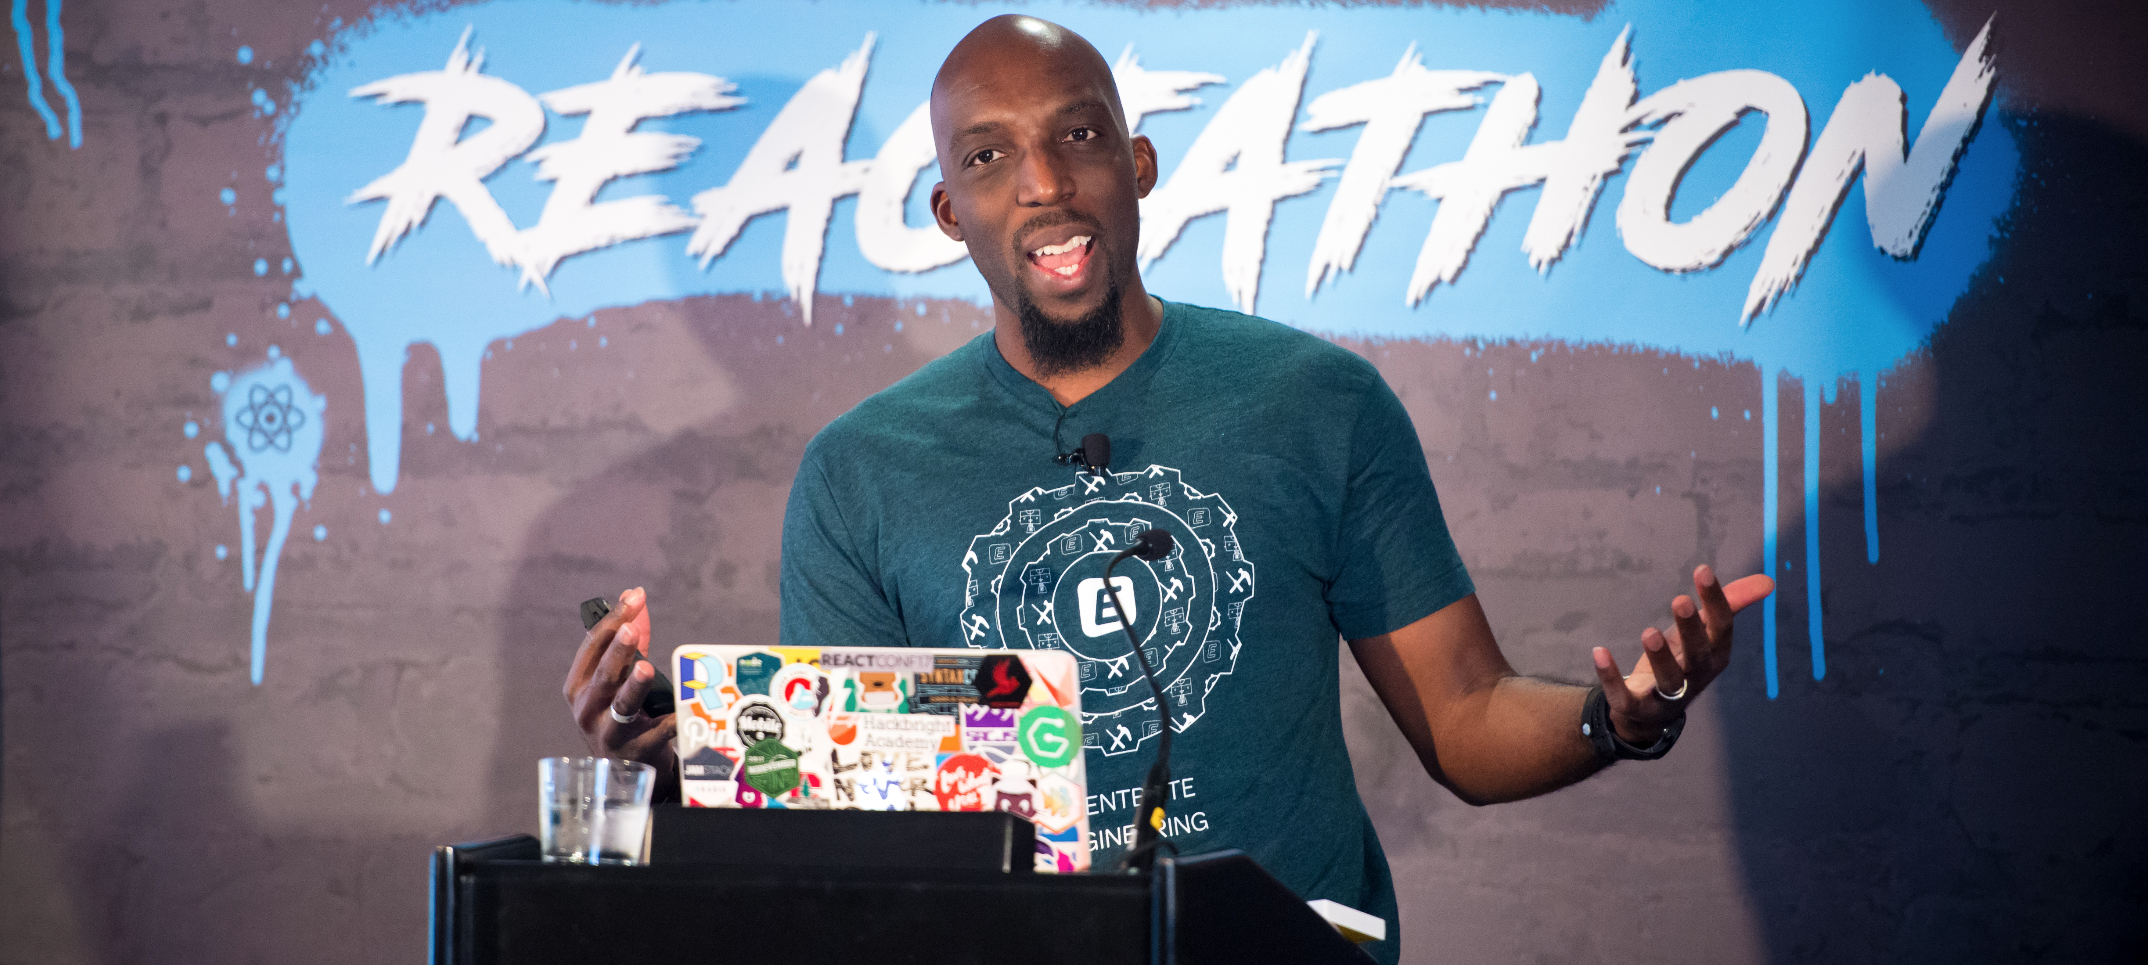 Ben Ilegbodu speaking at Reactathon 2018